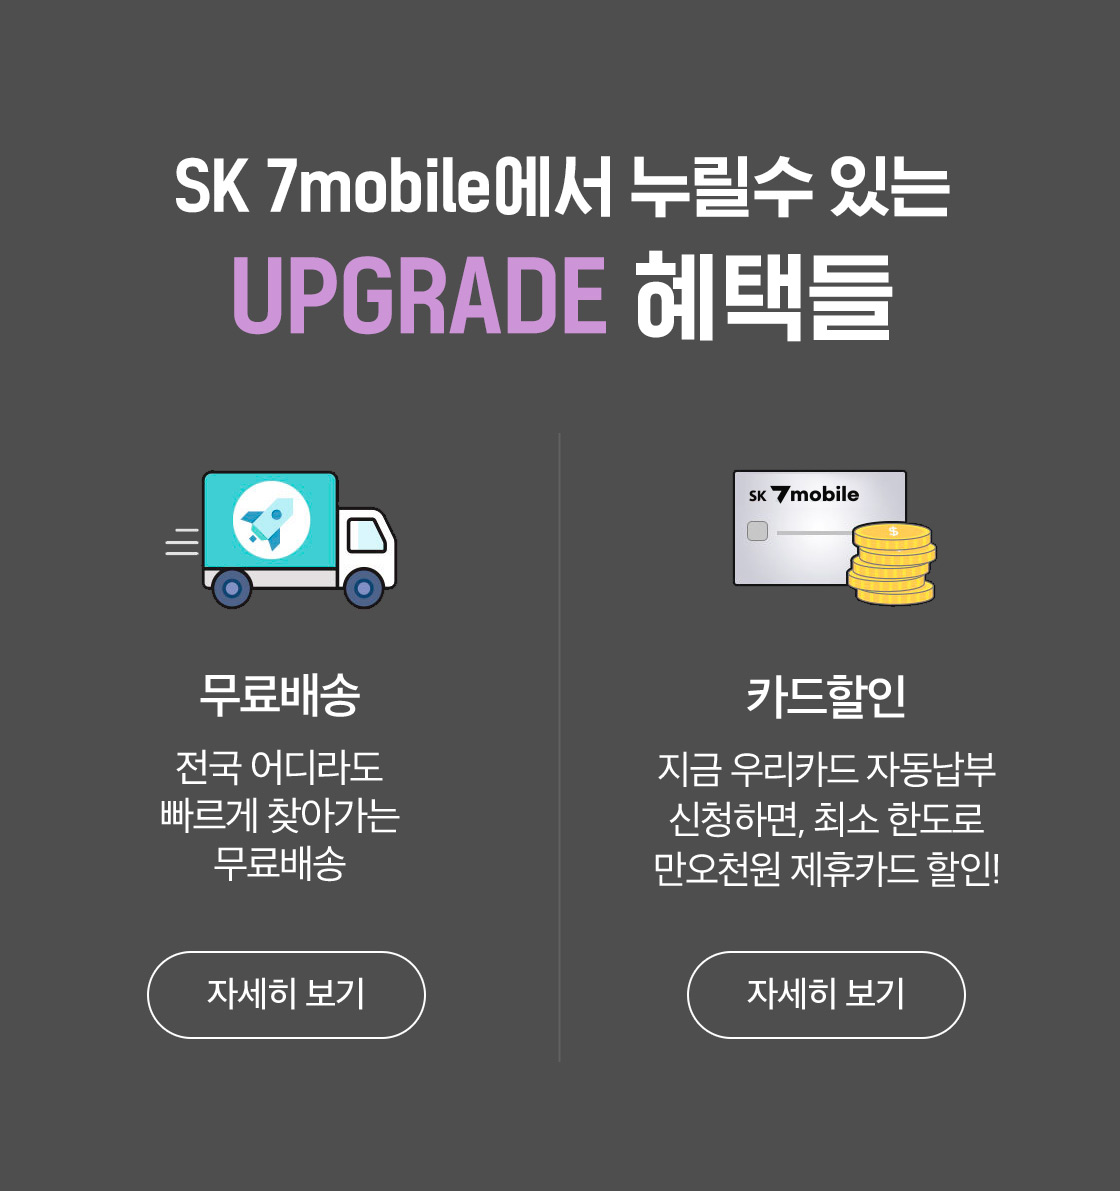 SK7 mobile 혜택